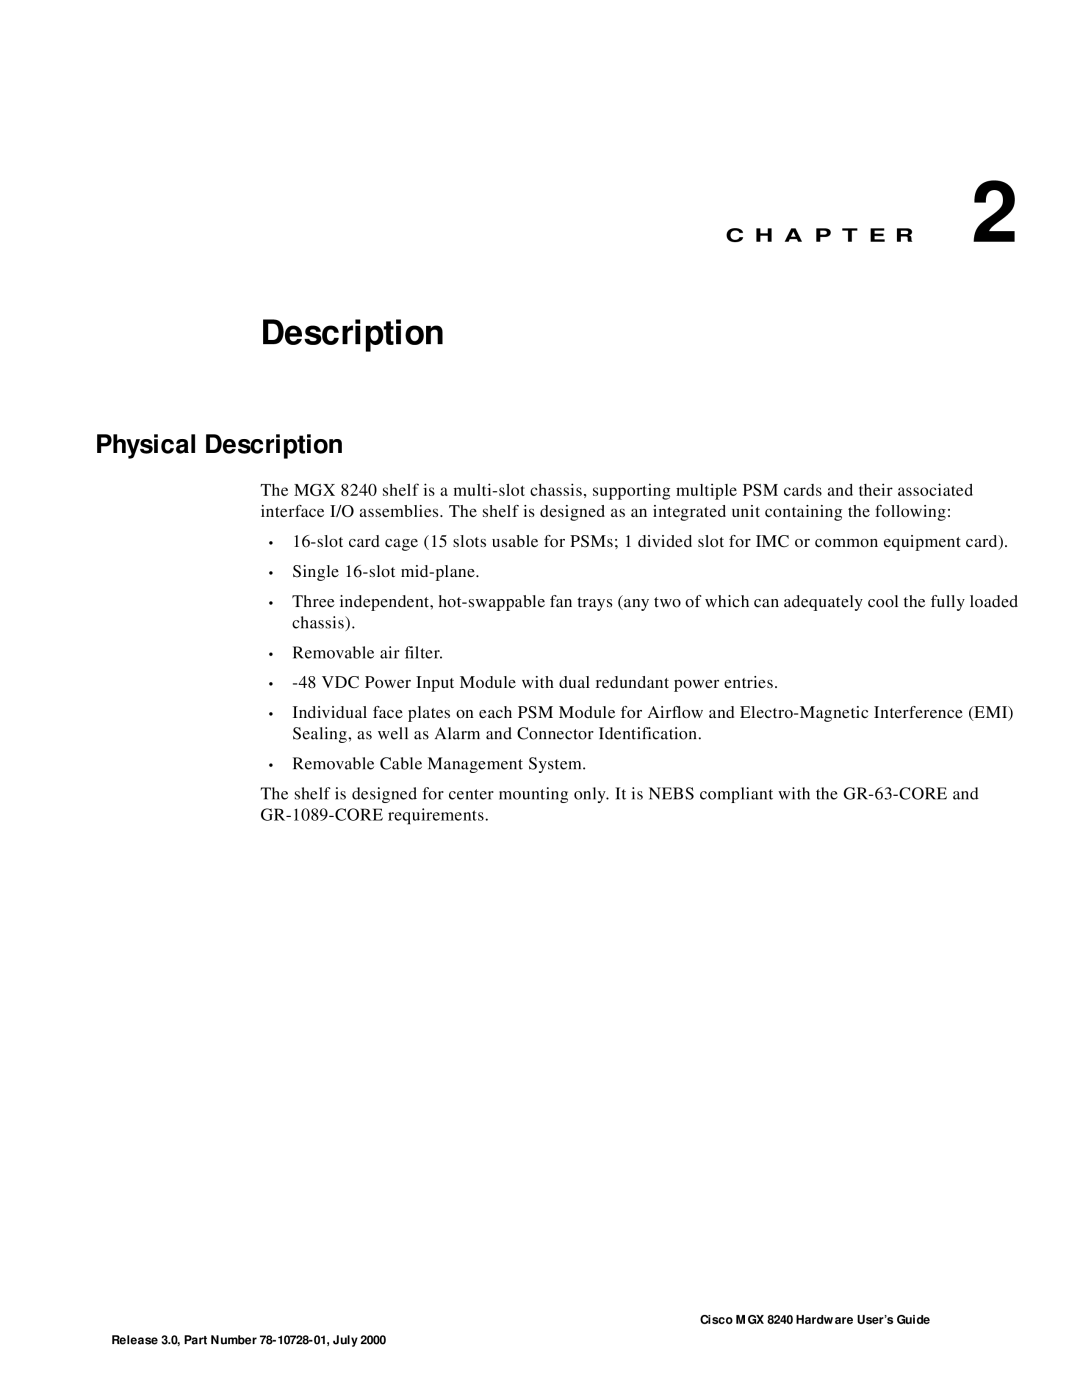 Cisco Systems MGX 8240 manual Physical Description, C H A P T E R 